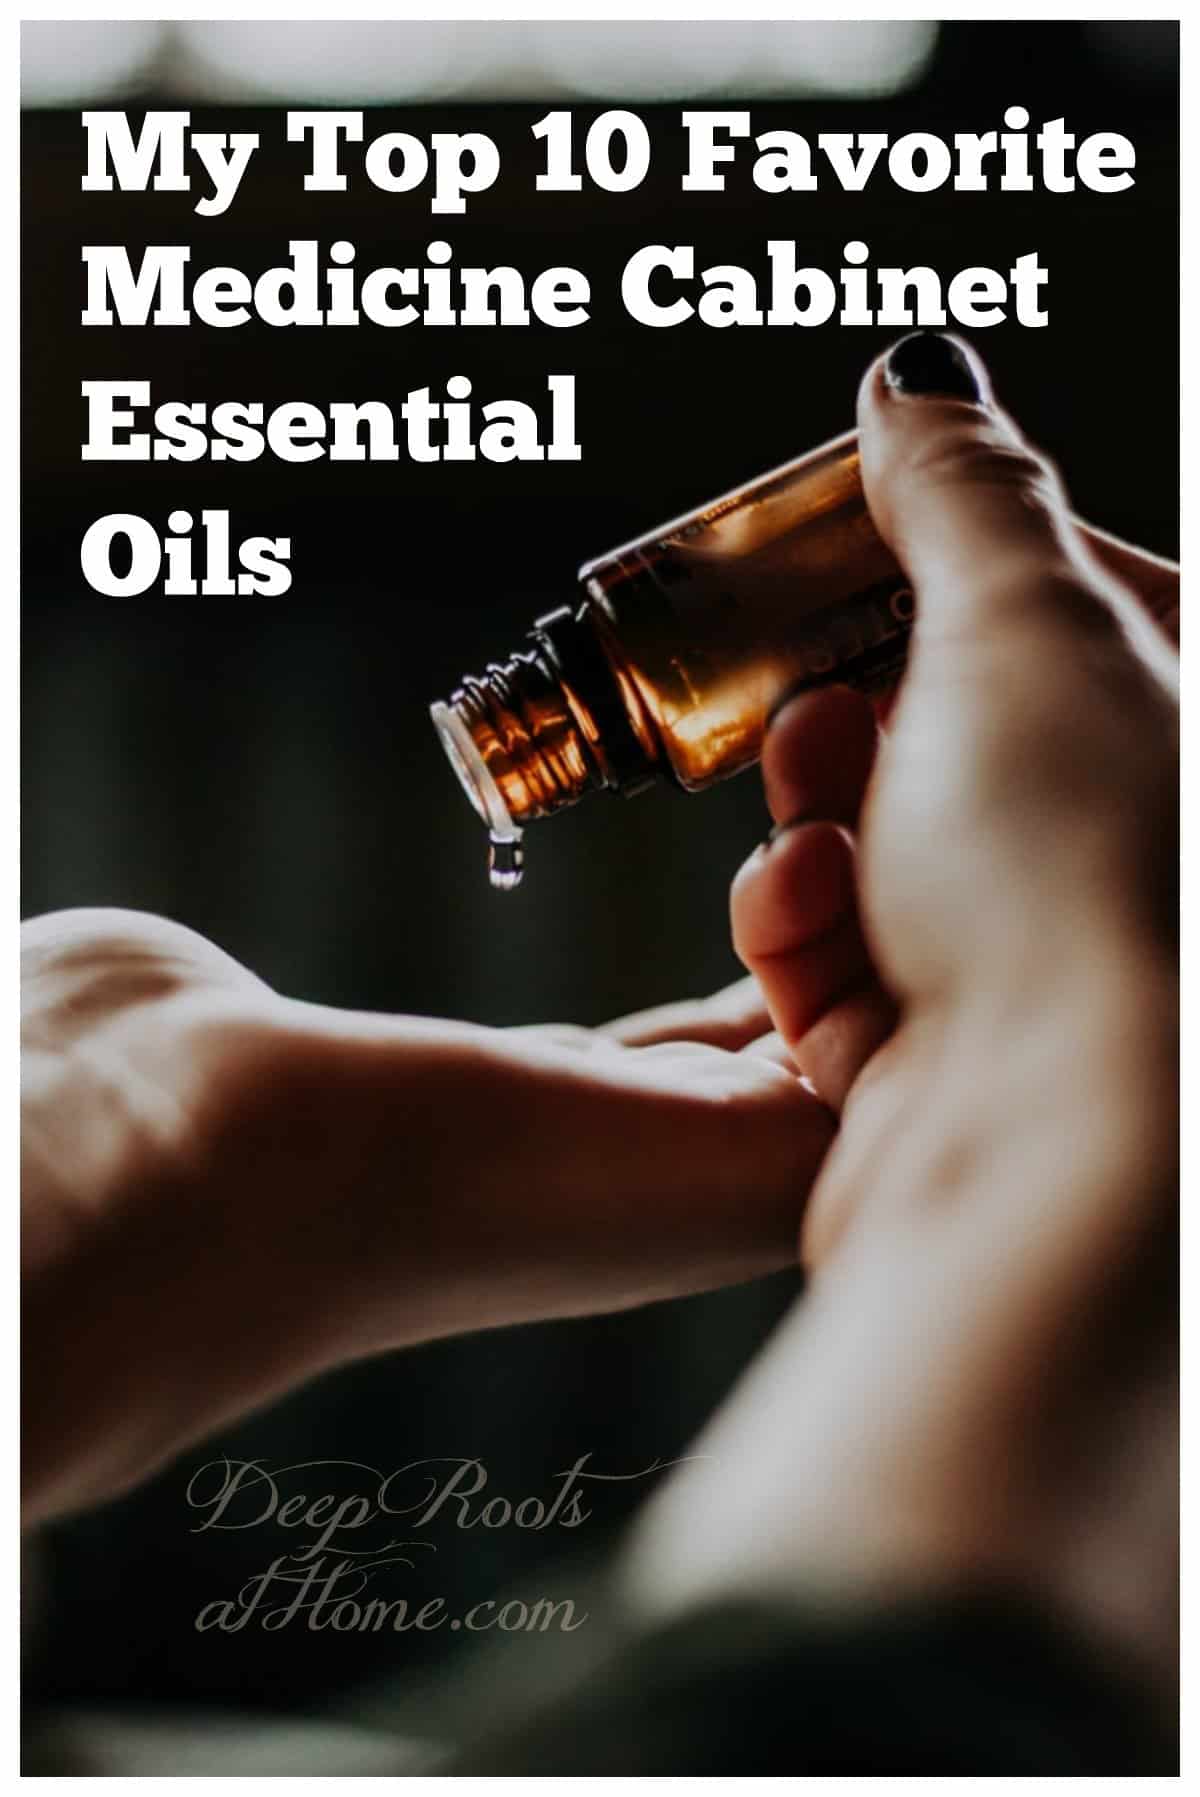 My Top 10 Favorite Medicine Cabinet Essential Oils. medicine chest in a bottle